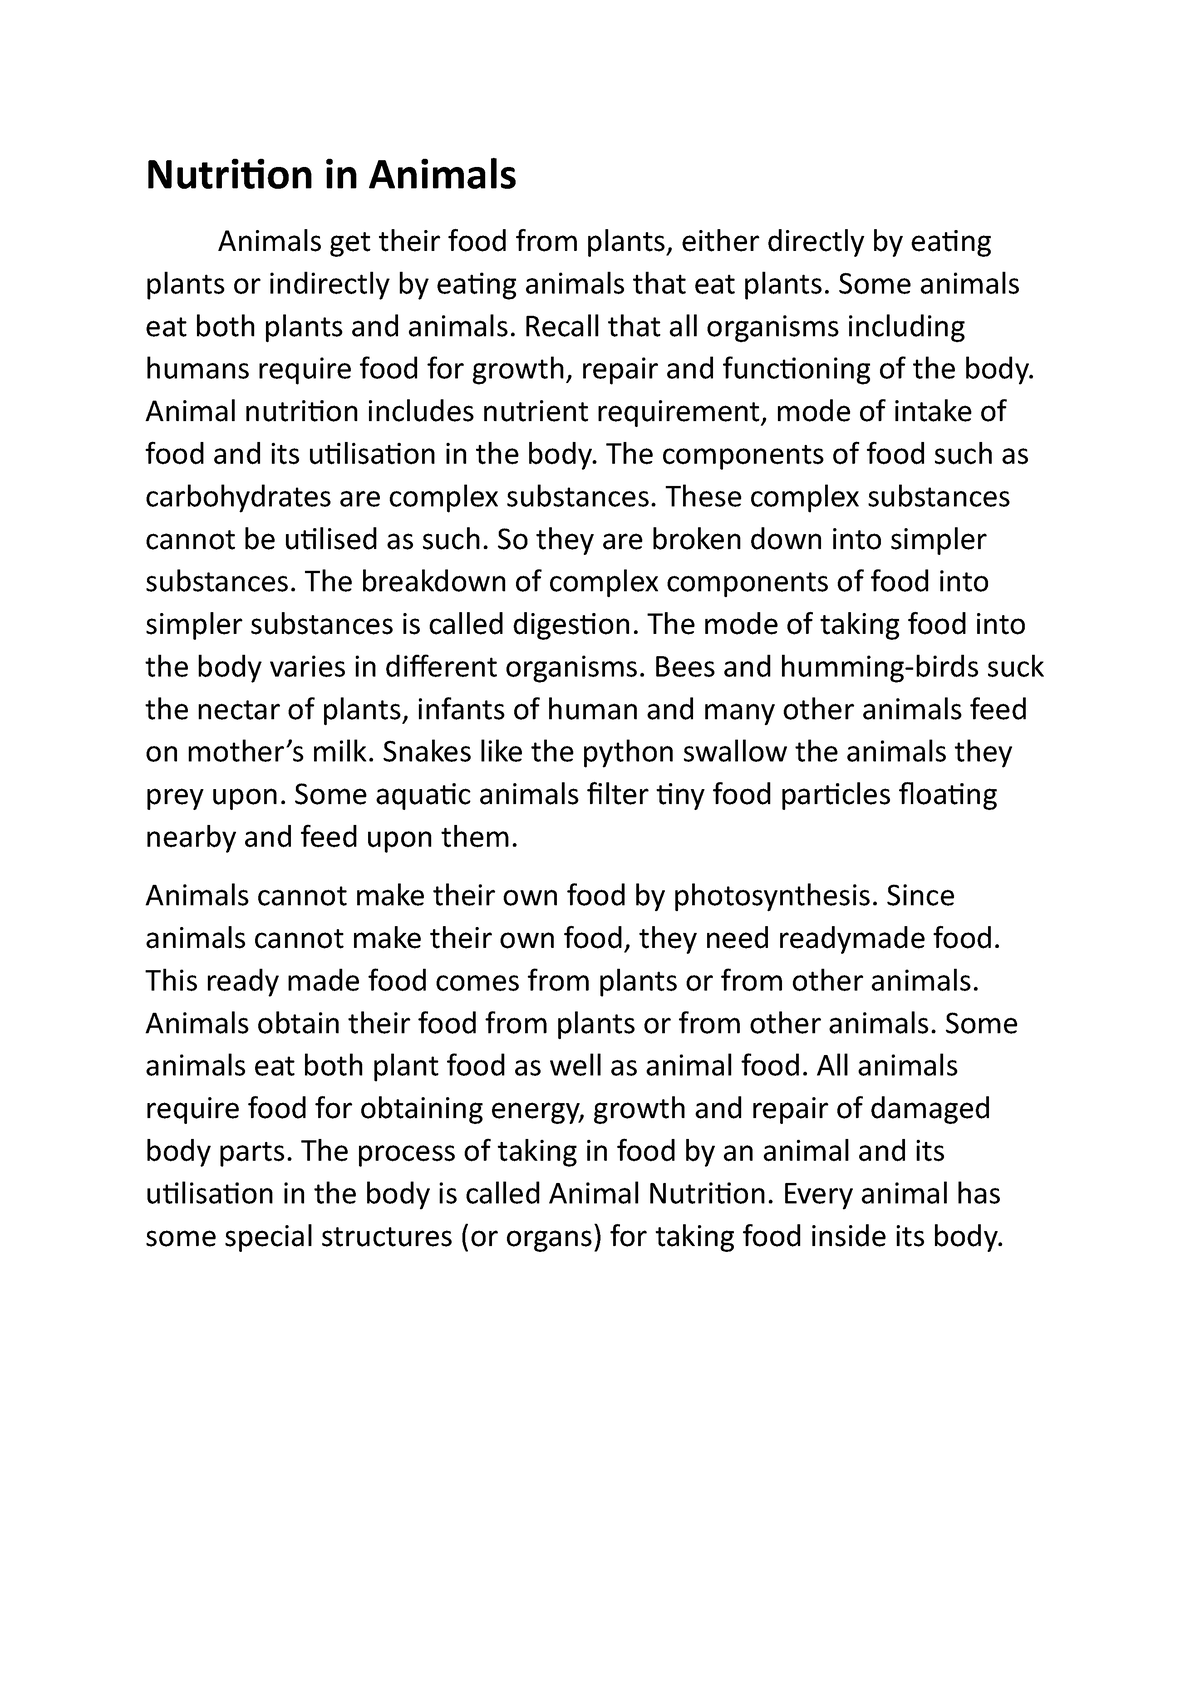 essay on nutrition in animals